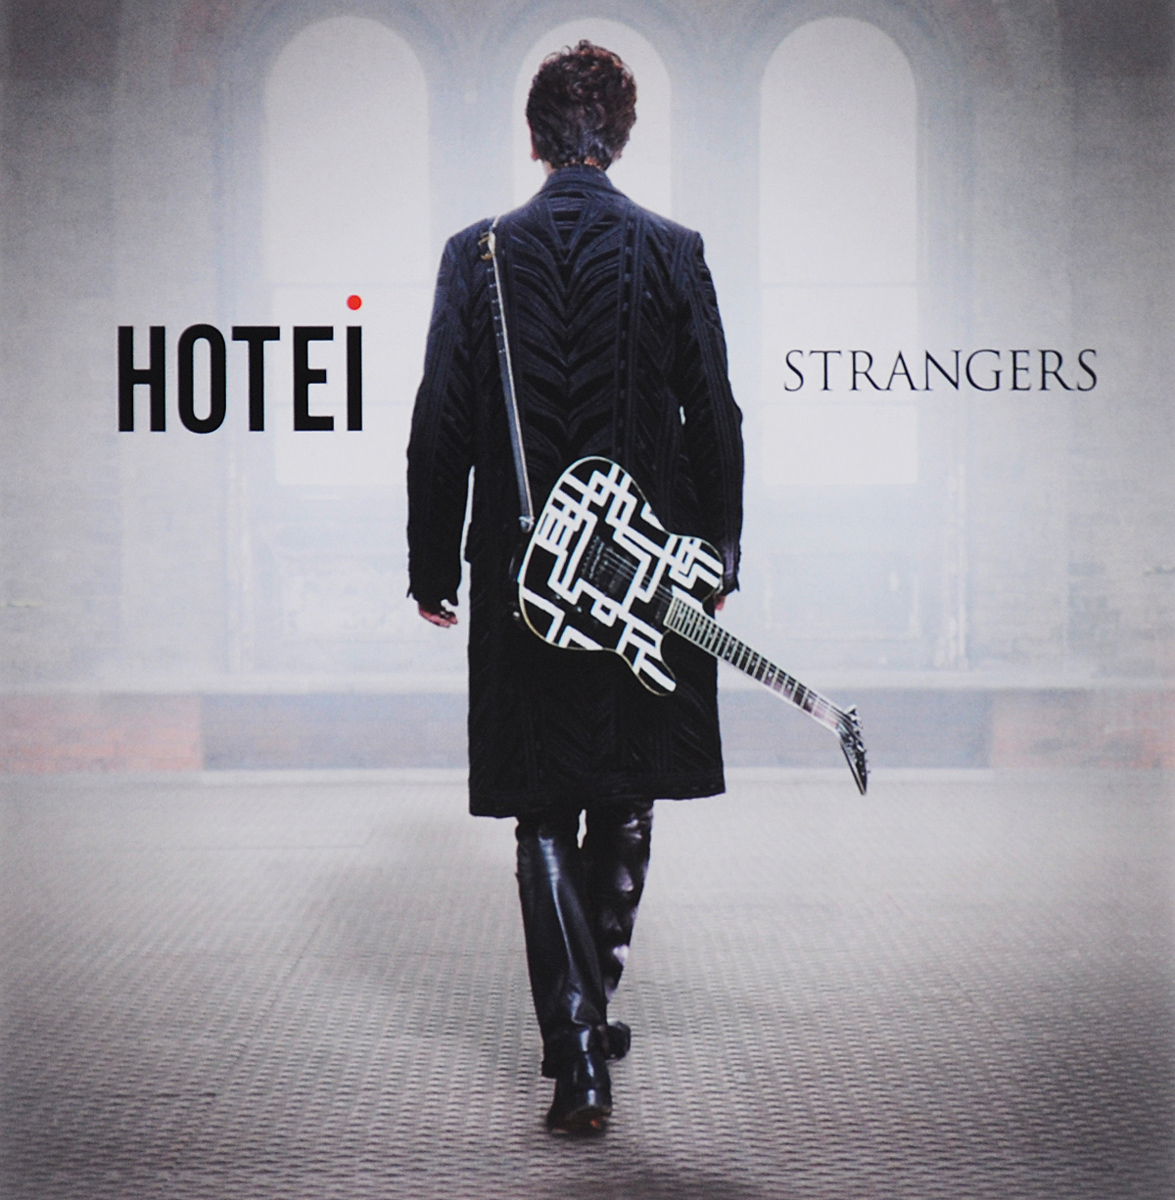 Hotei. Strangers